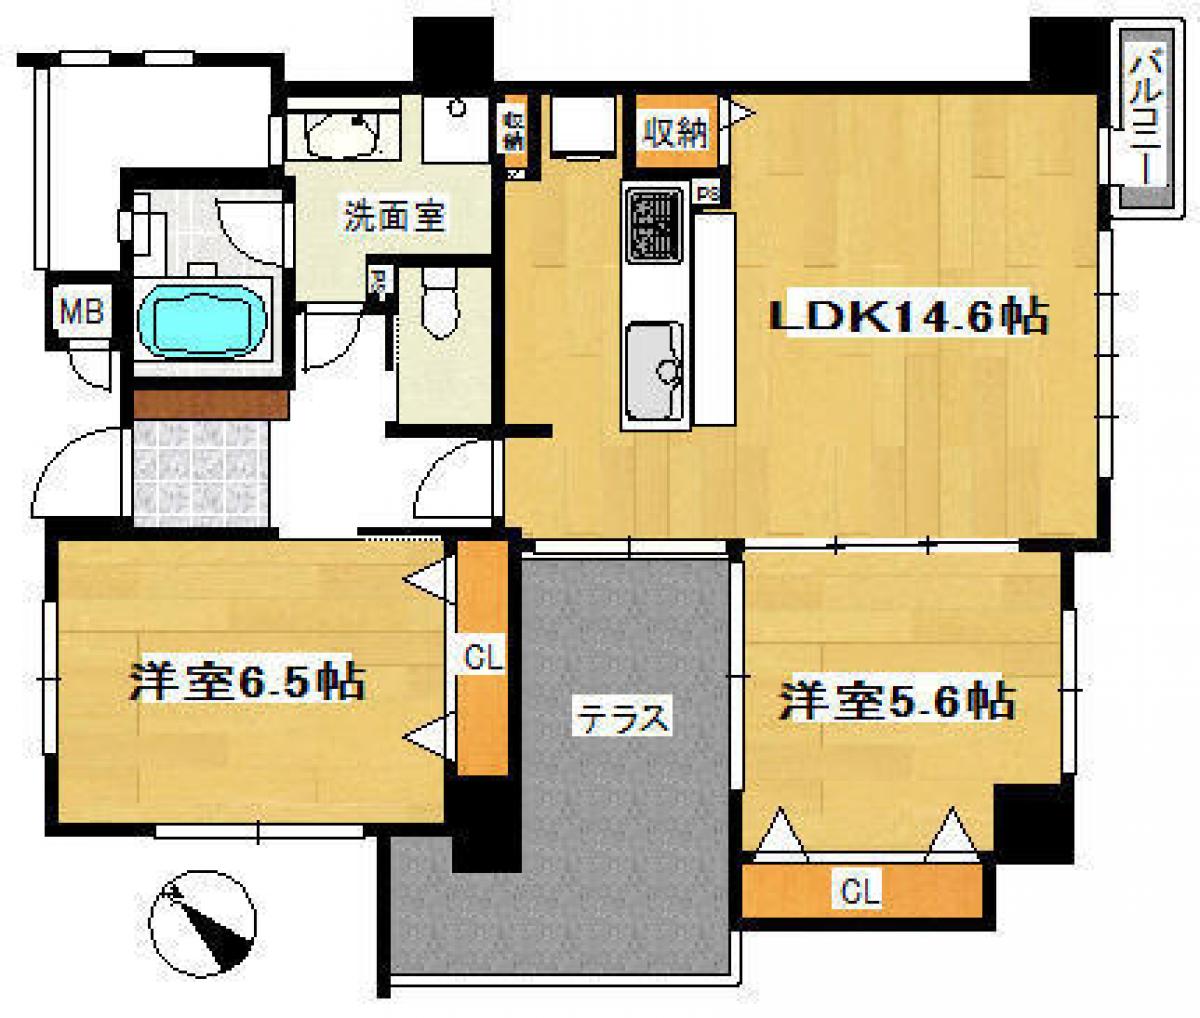 Picture of Apartment For Sale in Nakagami Gun Nishihara Cho, Okinawa, Japan